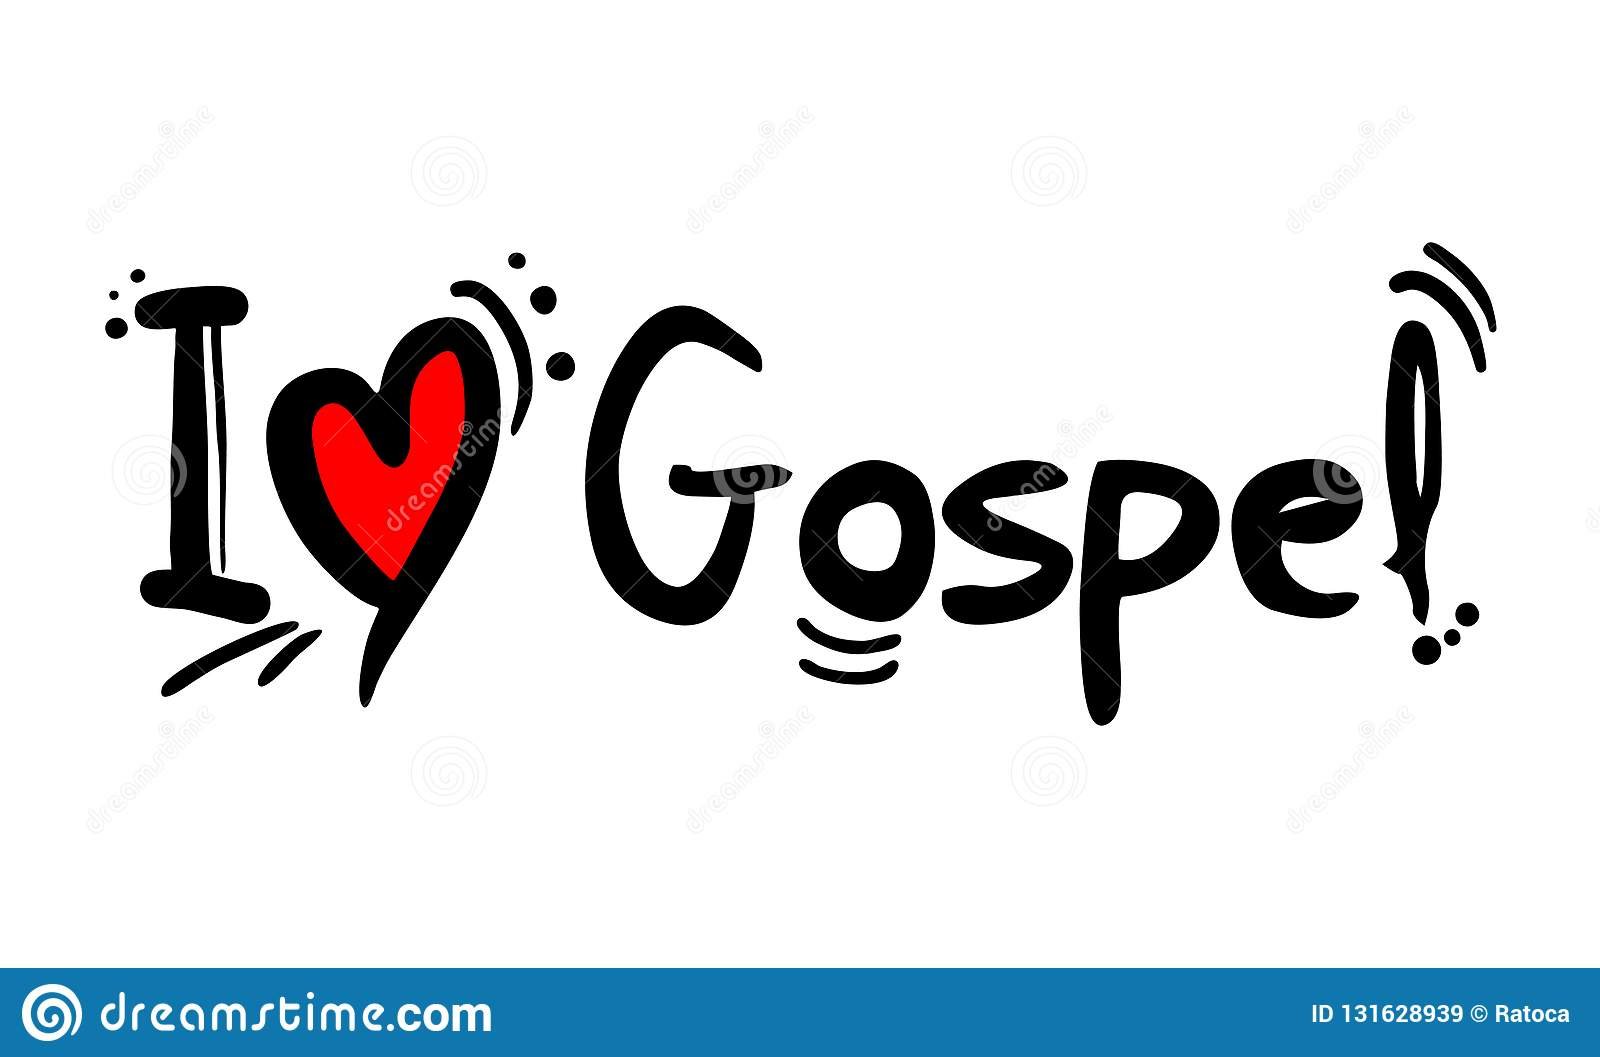 Bad News Good News-I love gospel image.jpg